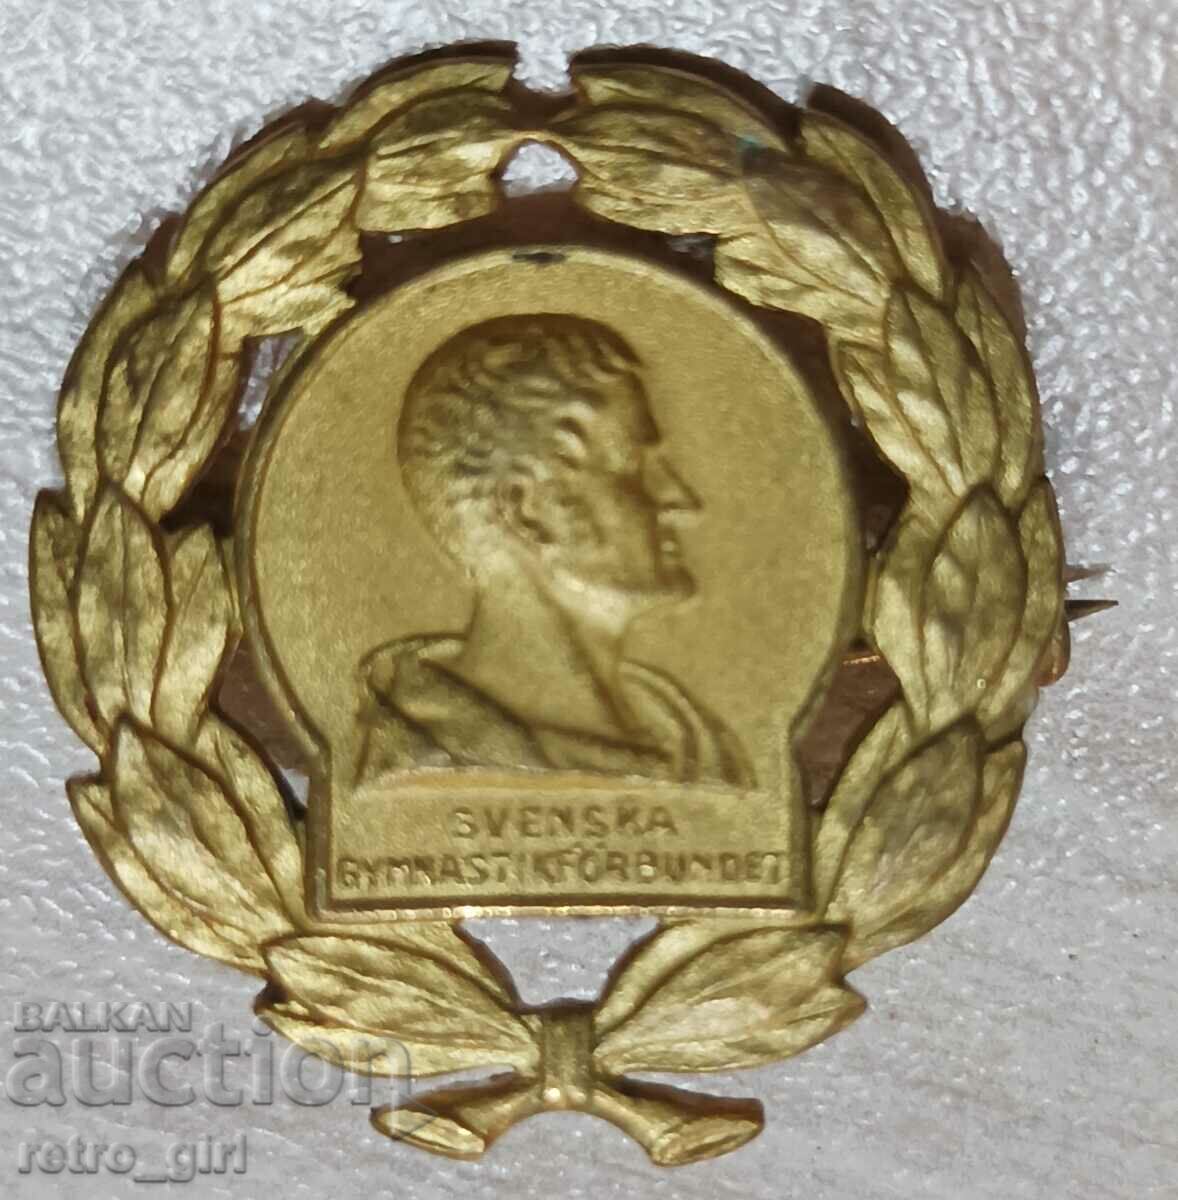 I am selling an old award badge, a badge!